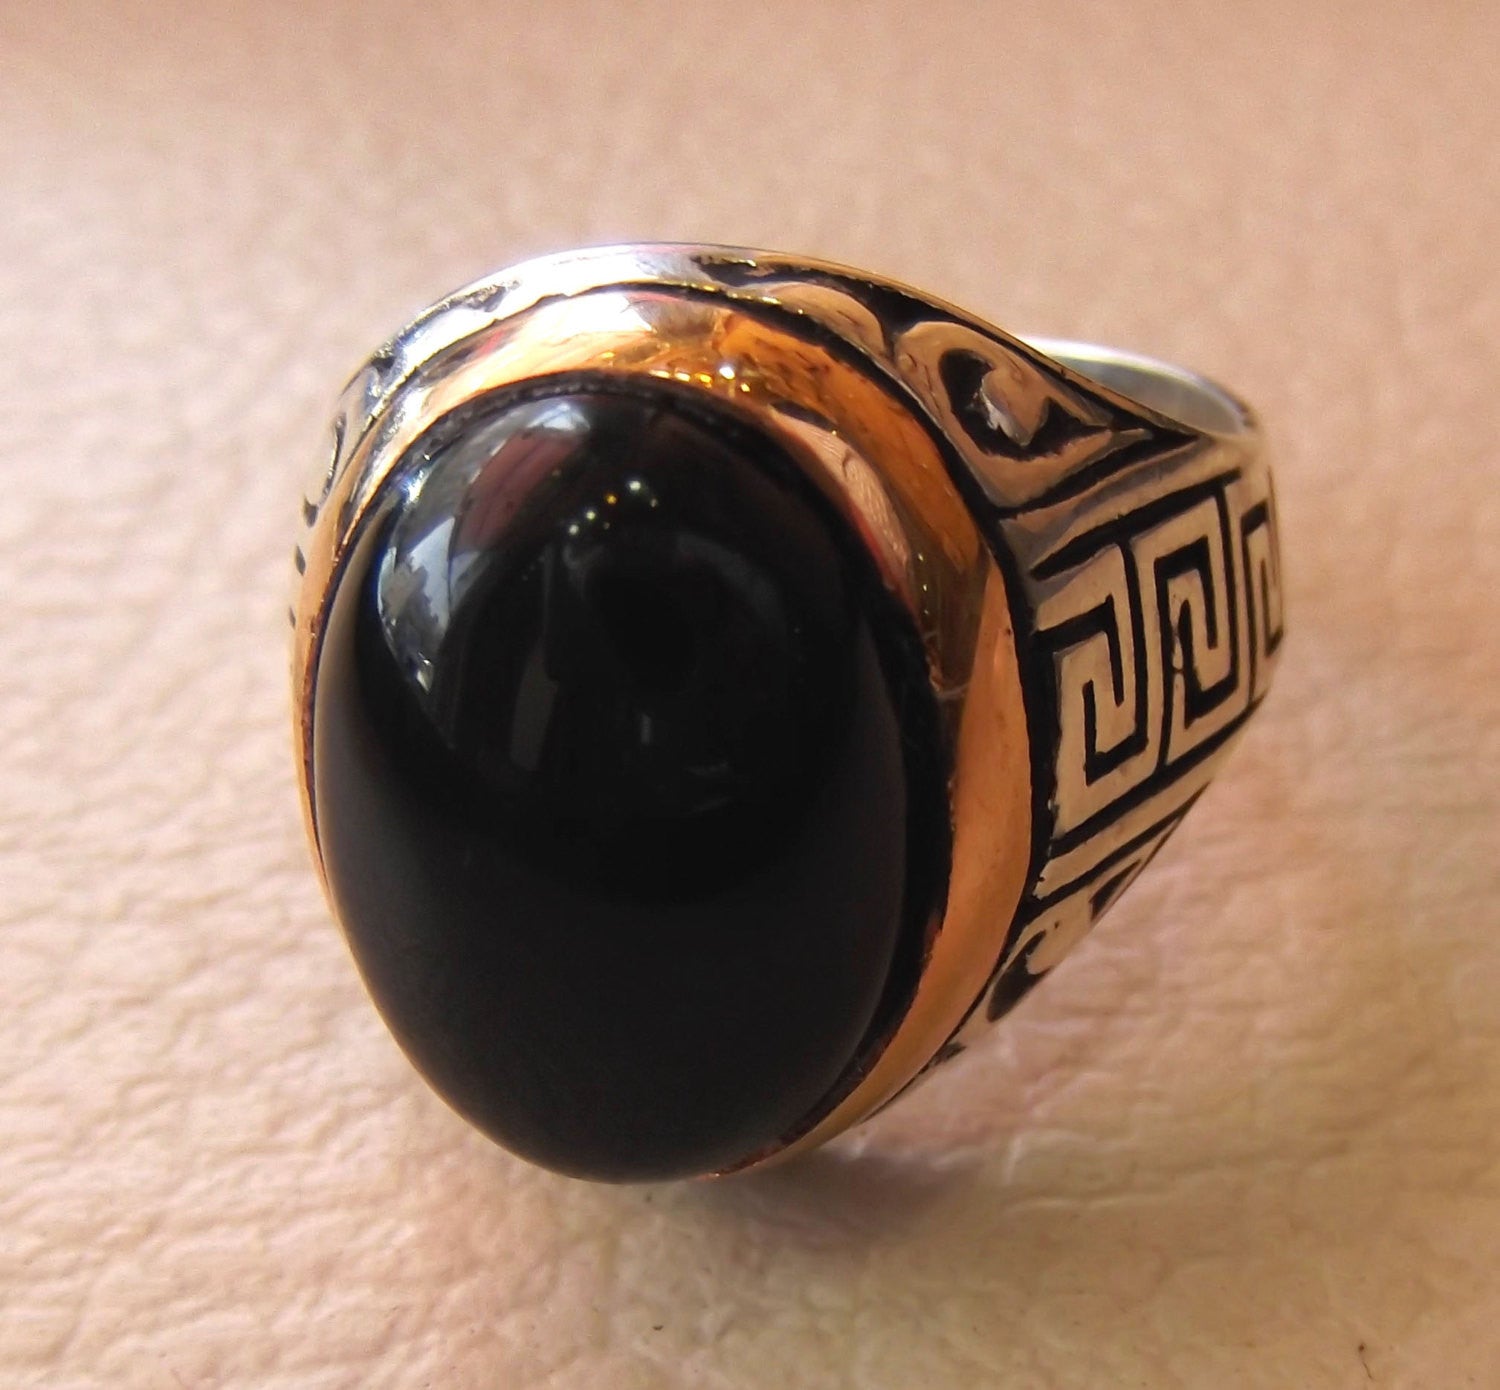 onyx agate black oval cabochon natural semi precious stone sterling silver 925 heavy ring bronze frame all sizes jewelry arabic persian